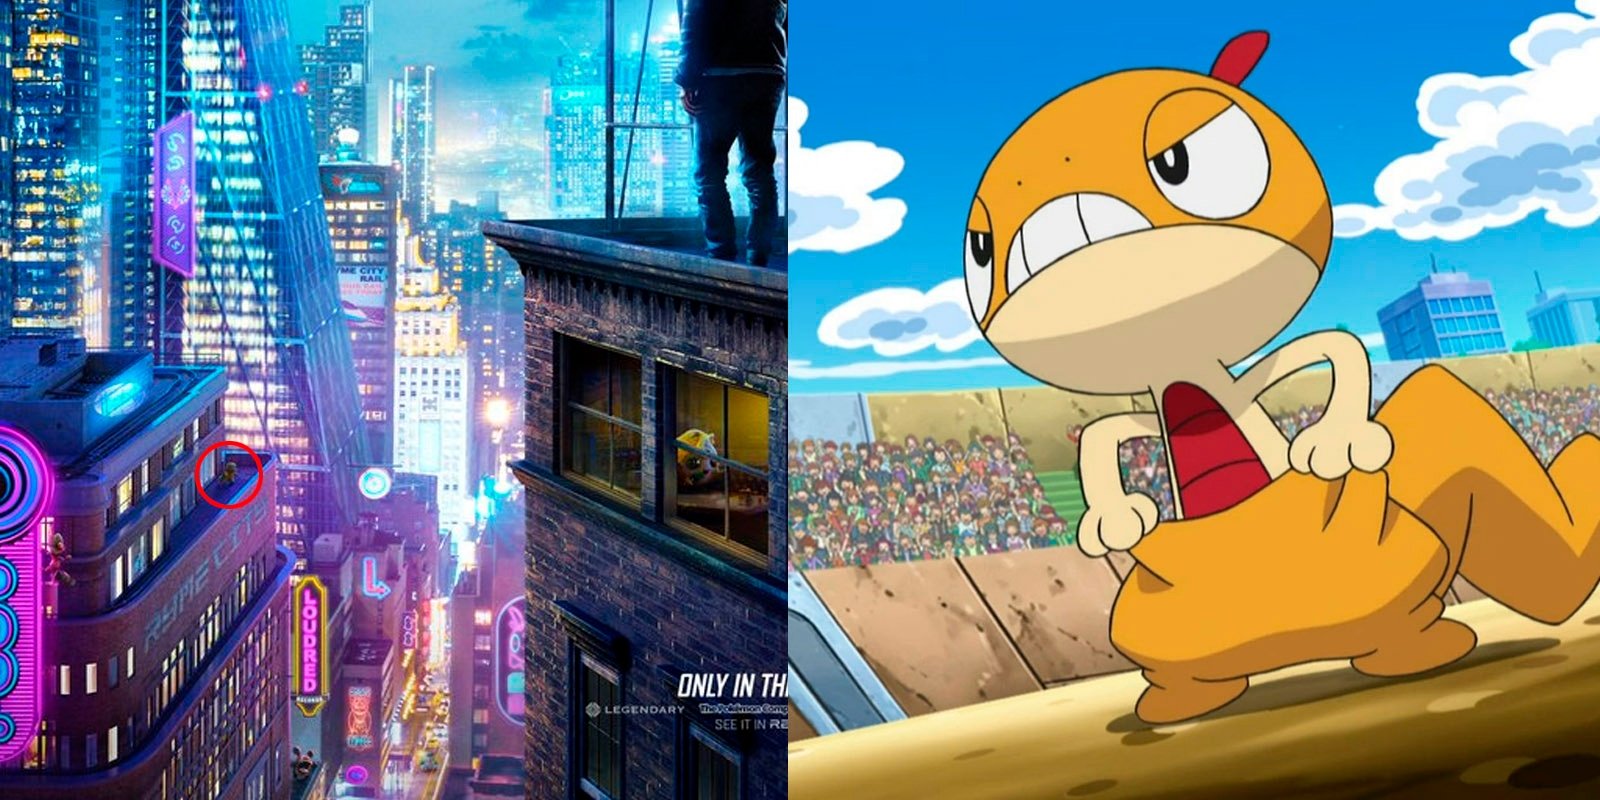 Scraggy Detective Pikachu